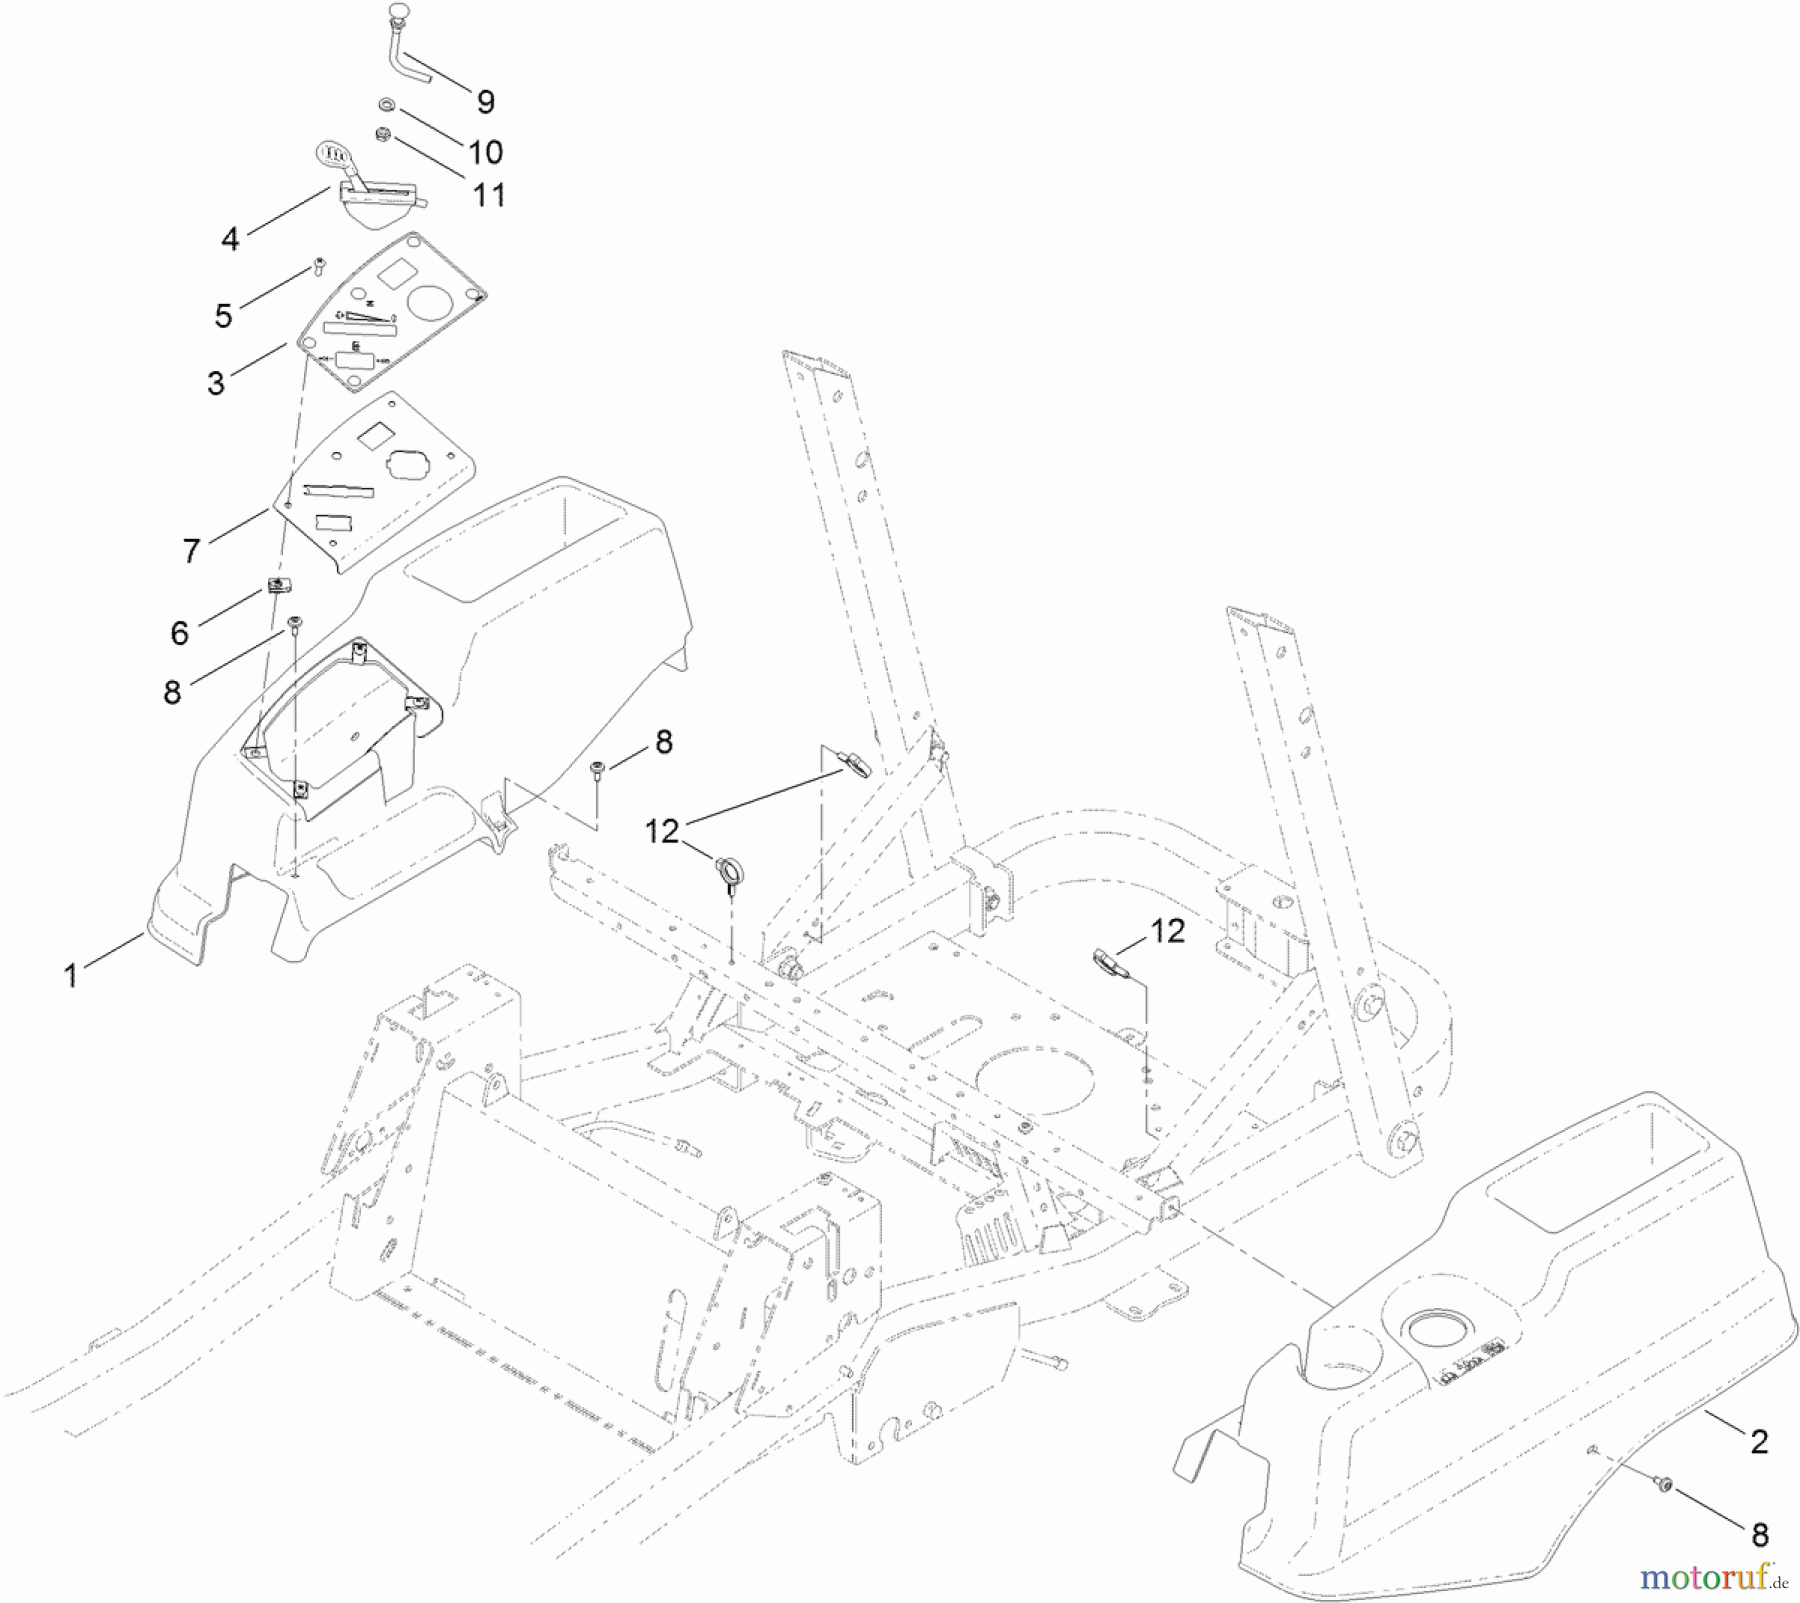  Toro Neu Mowers, Zero-Turn 74842 (ZX5420) - Toro TITAN ZX5420 Zero-Turn-Radius Riding Mower, 2012 (SN 312000001-312999999) CONTROL PANEL AND BODY STYLING POD ASSEMBLY